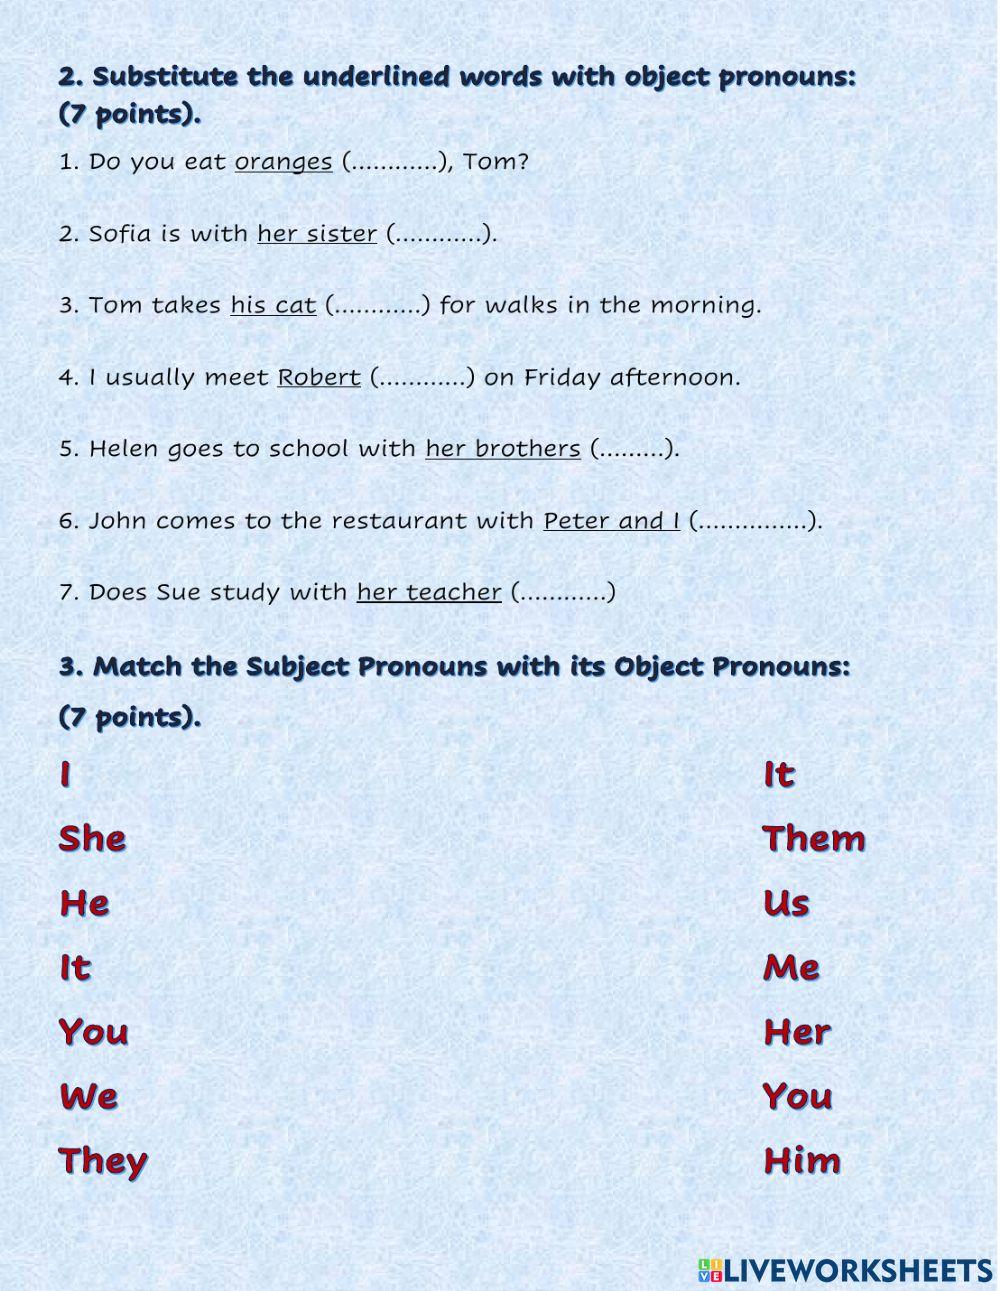 Grammar Test Object Pronouns